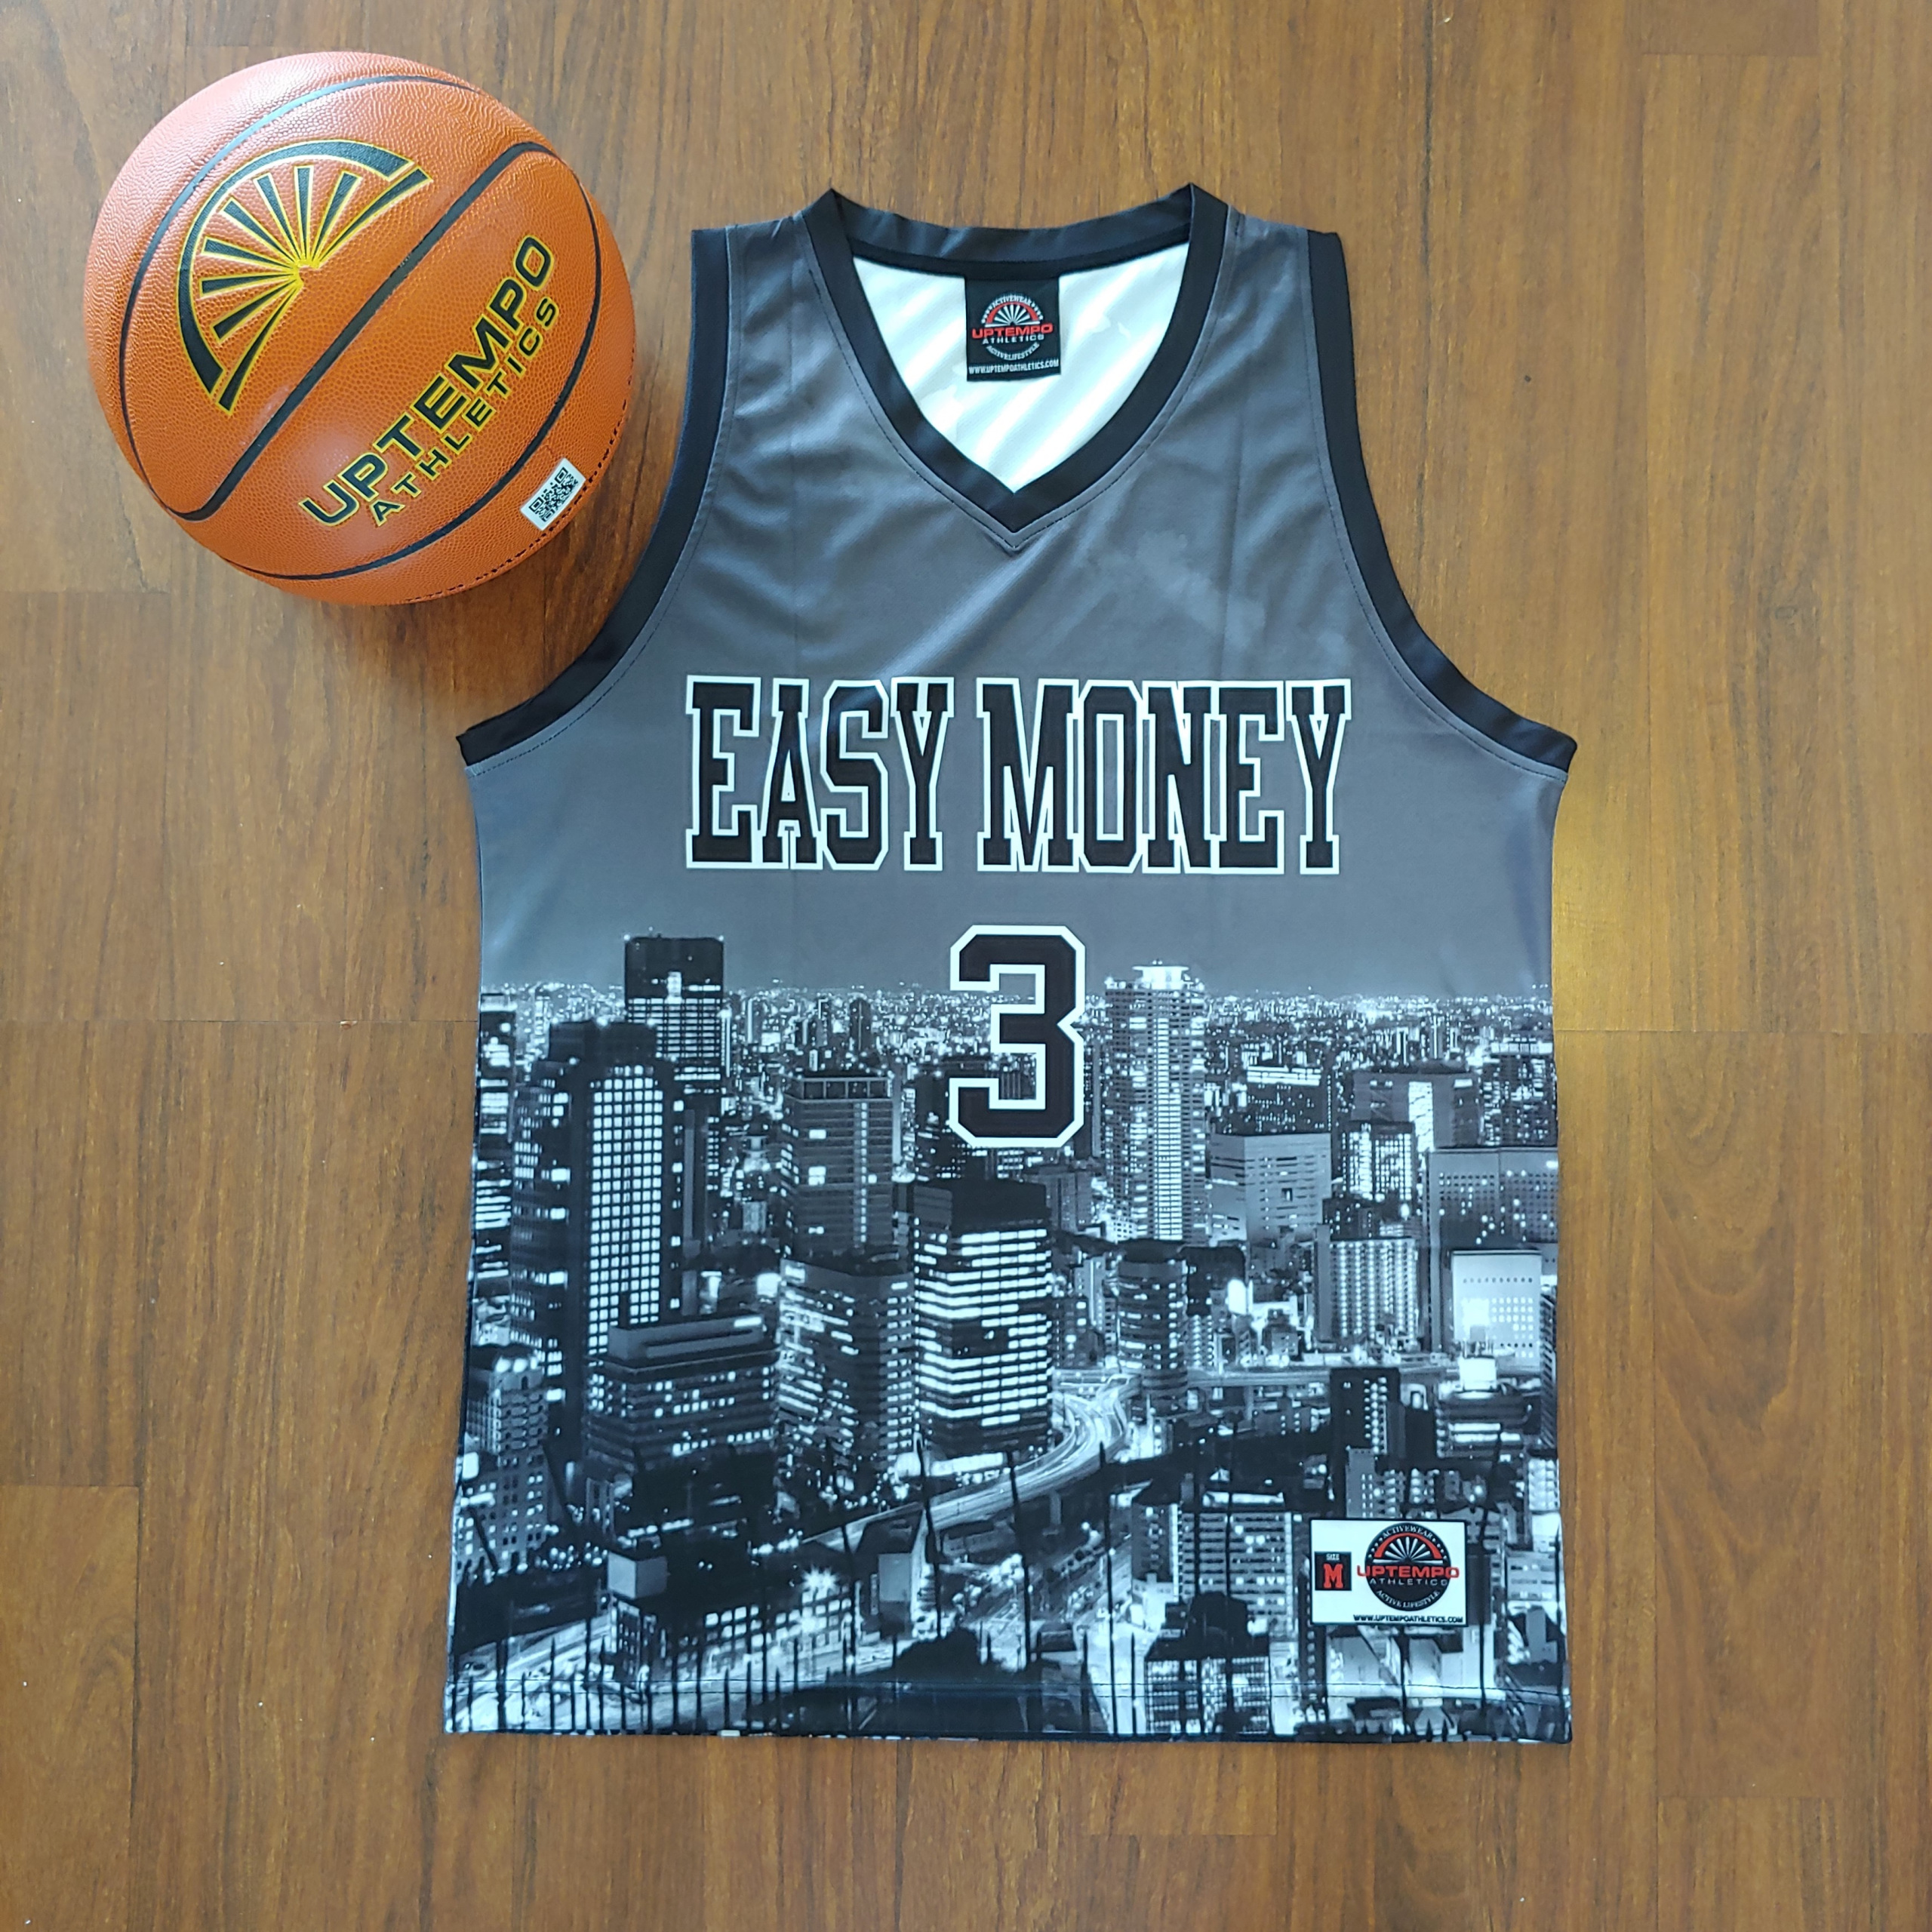 Custom Teal Basketball Jersey  Custom basketball, Basketball jersey, Jersey